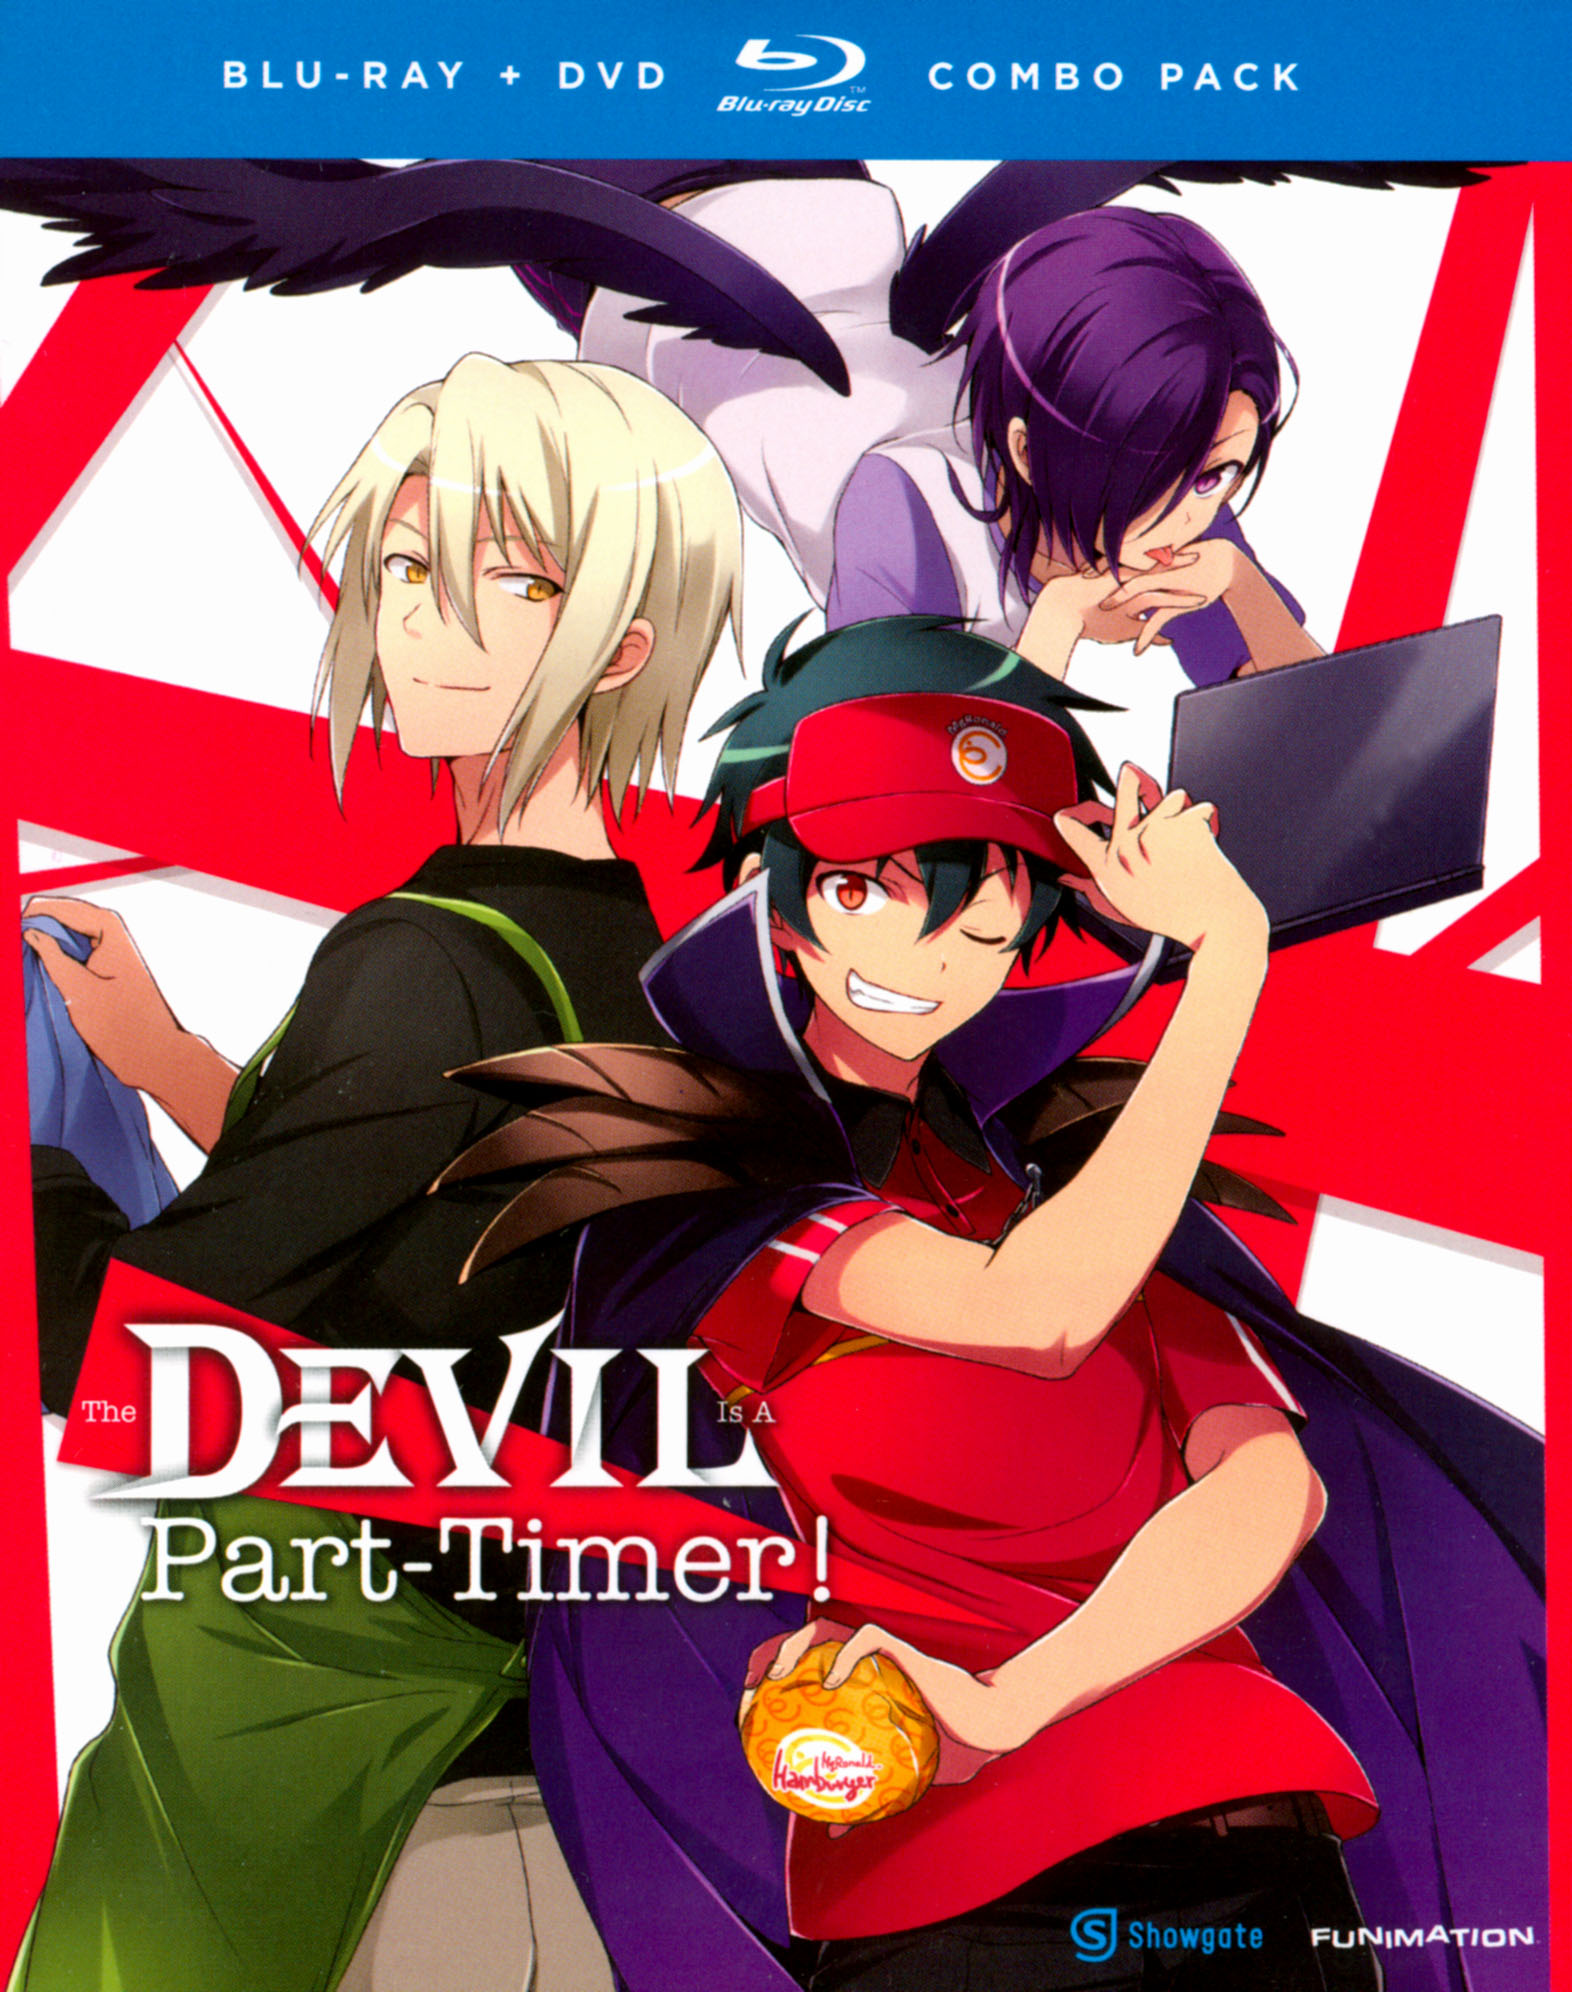 The Devil is a Part-Timer Season 2 BLURAY